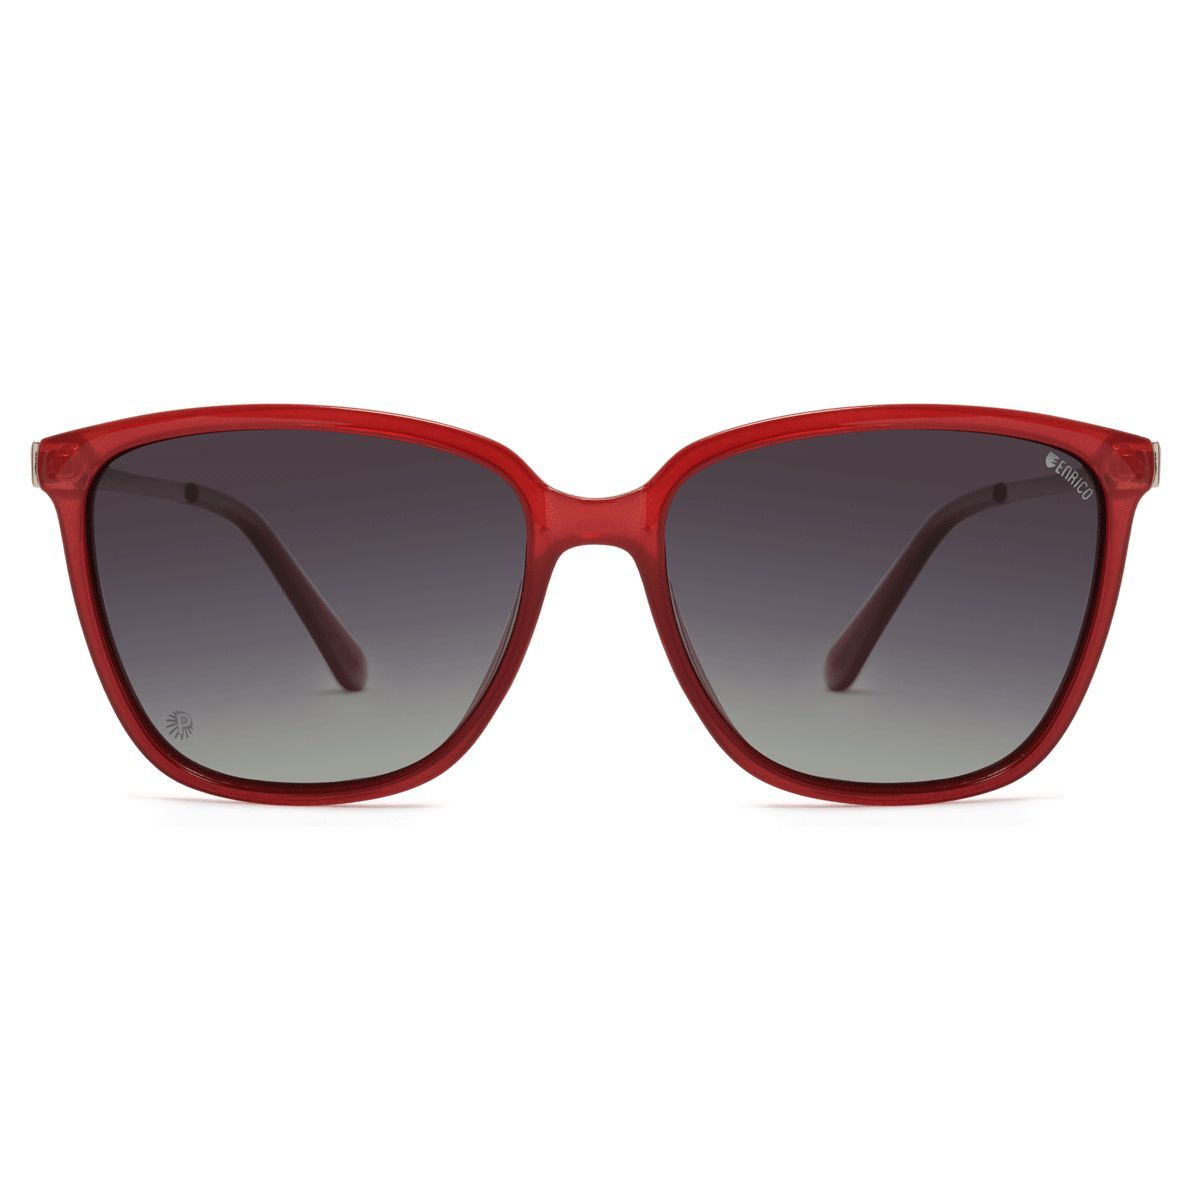 Enrico Red Polycarbonate Wayfarer Jade Unisex Sunglasses